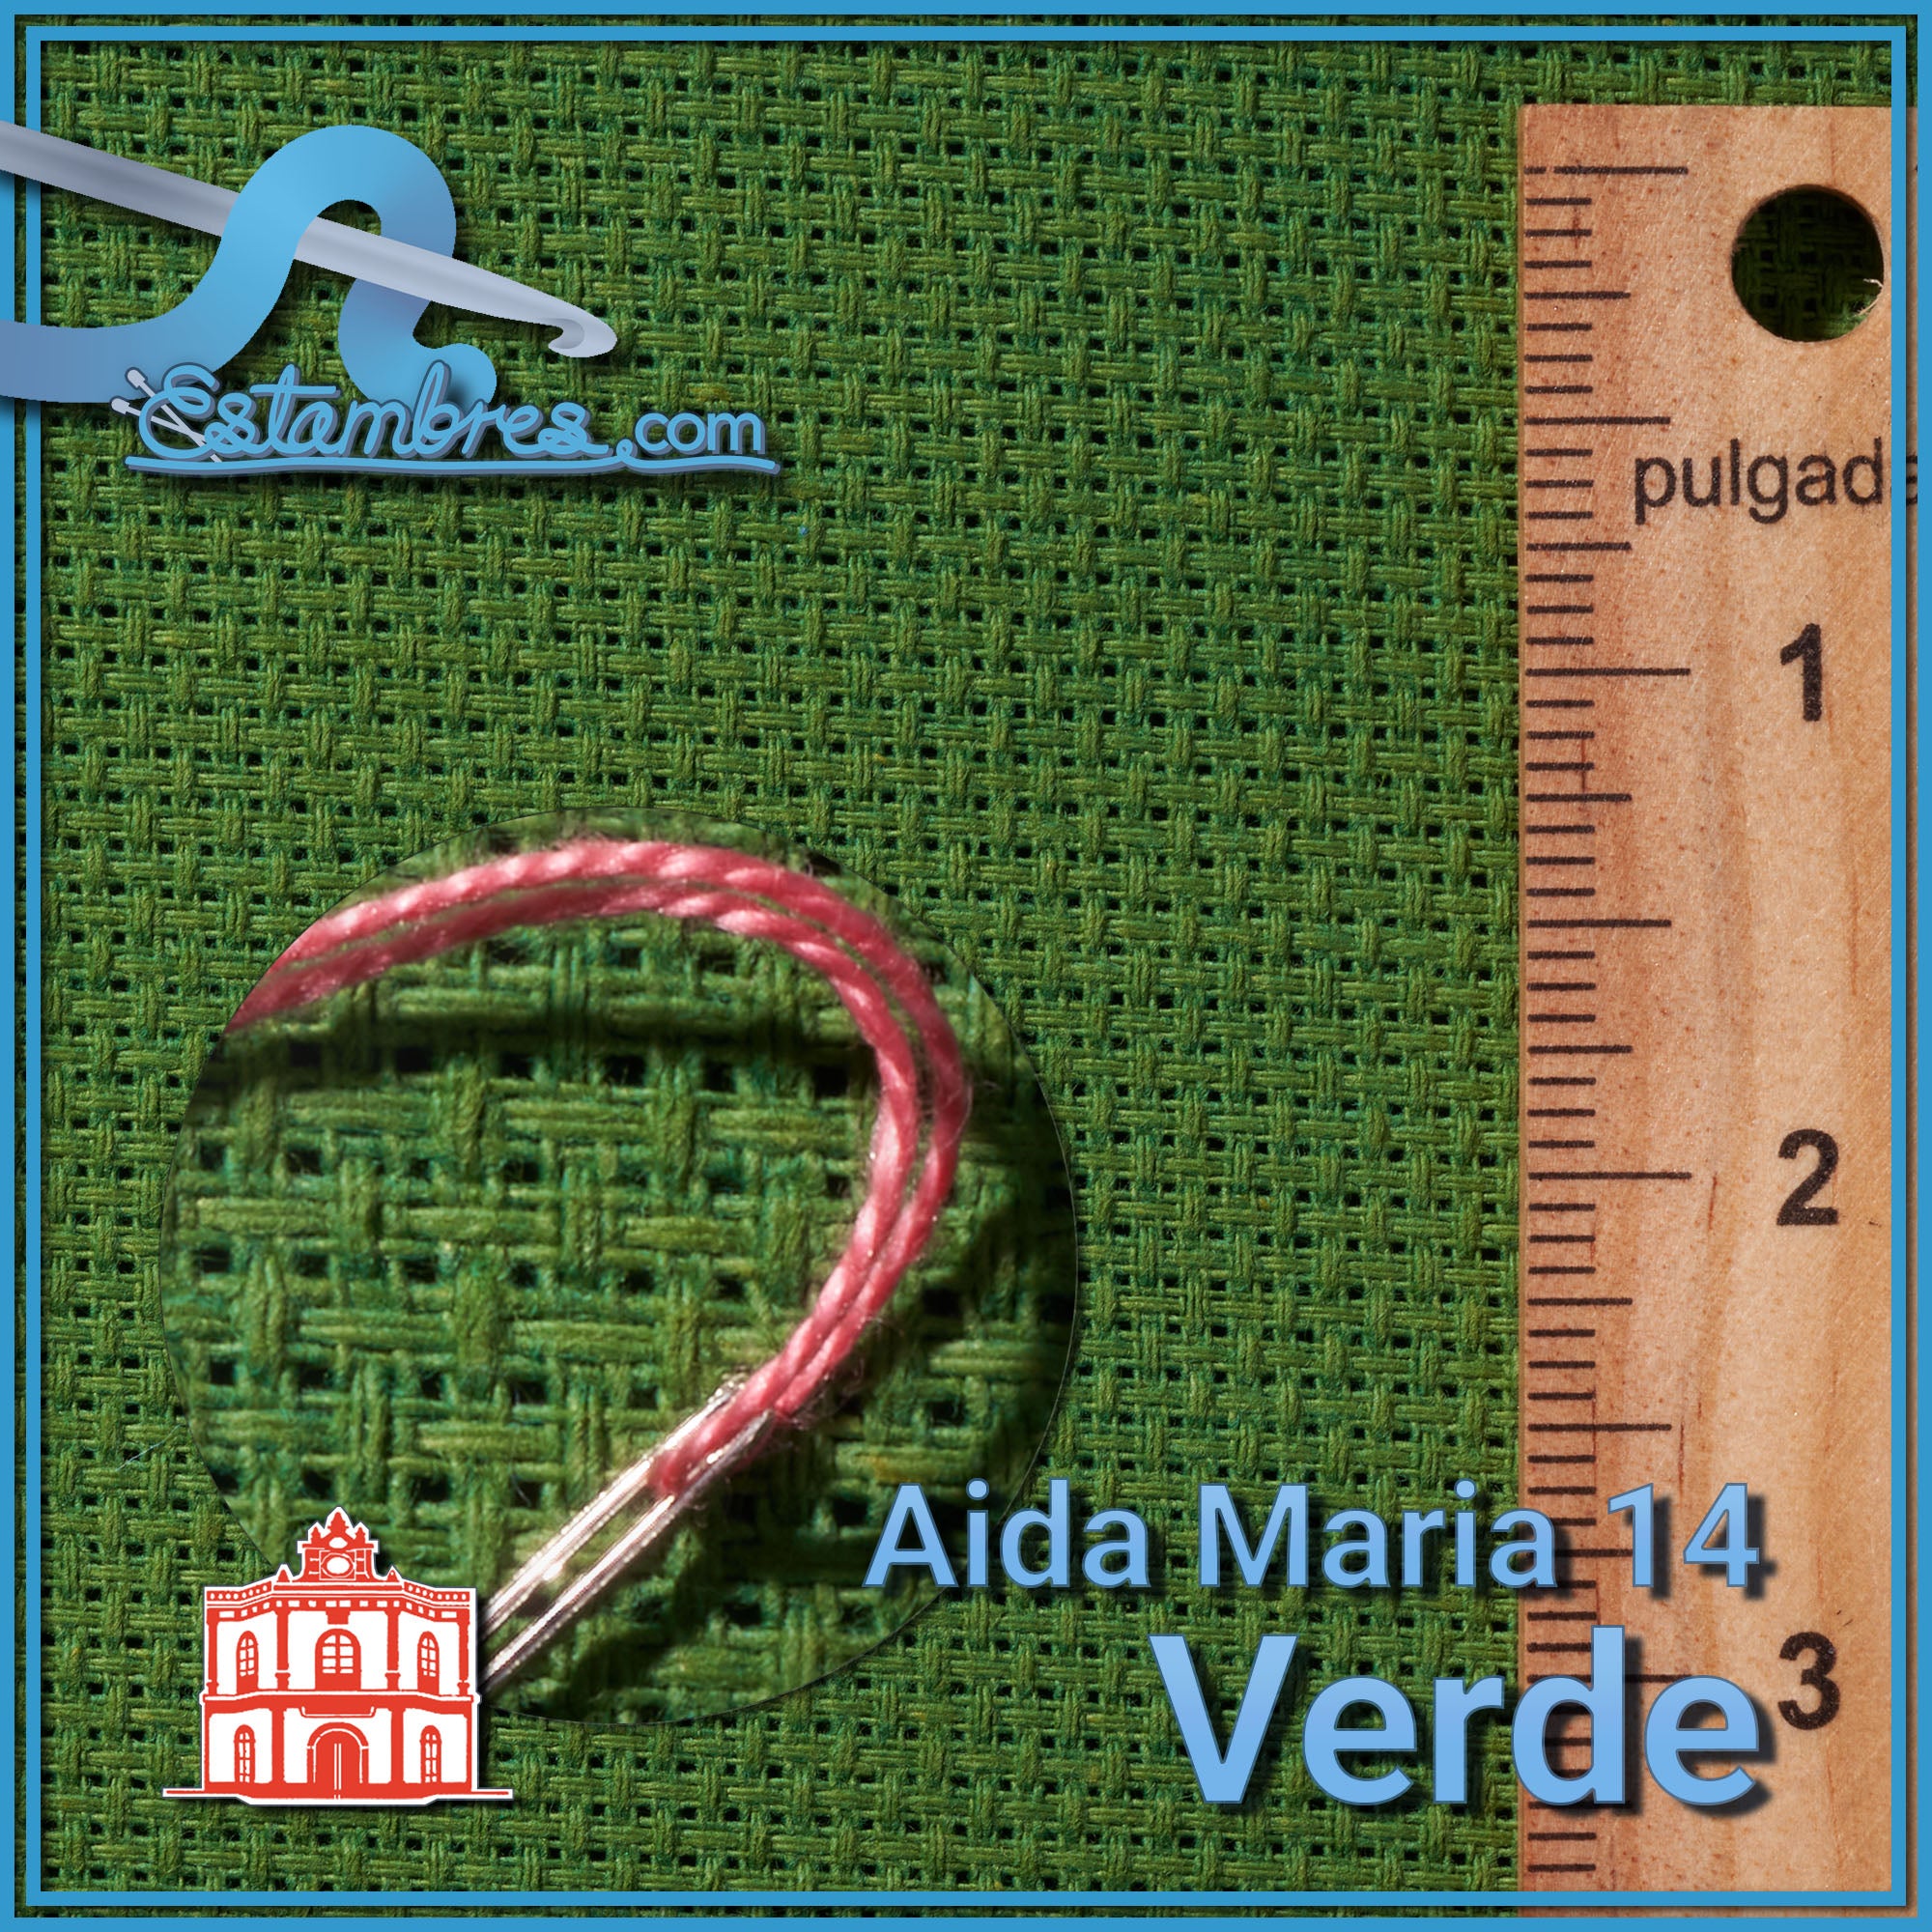 Aida Maria  #14 Verde